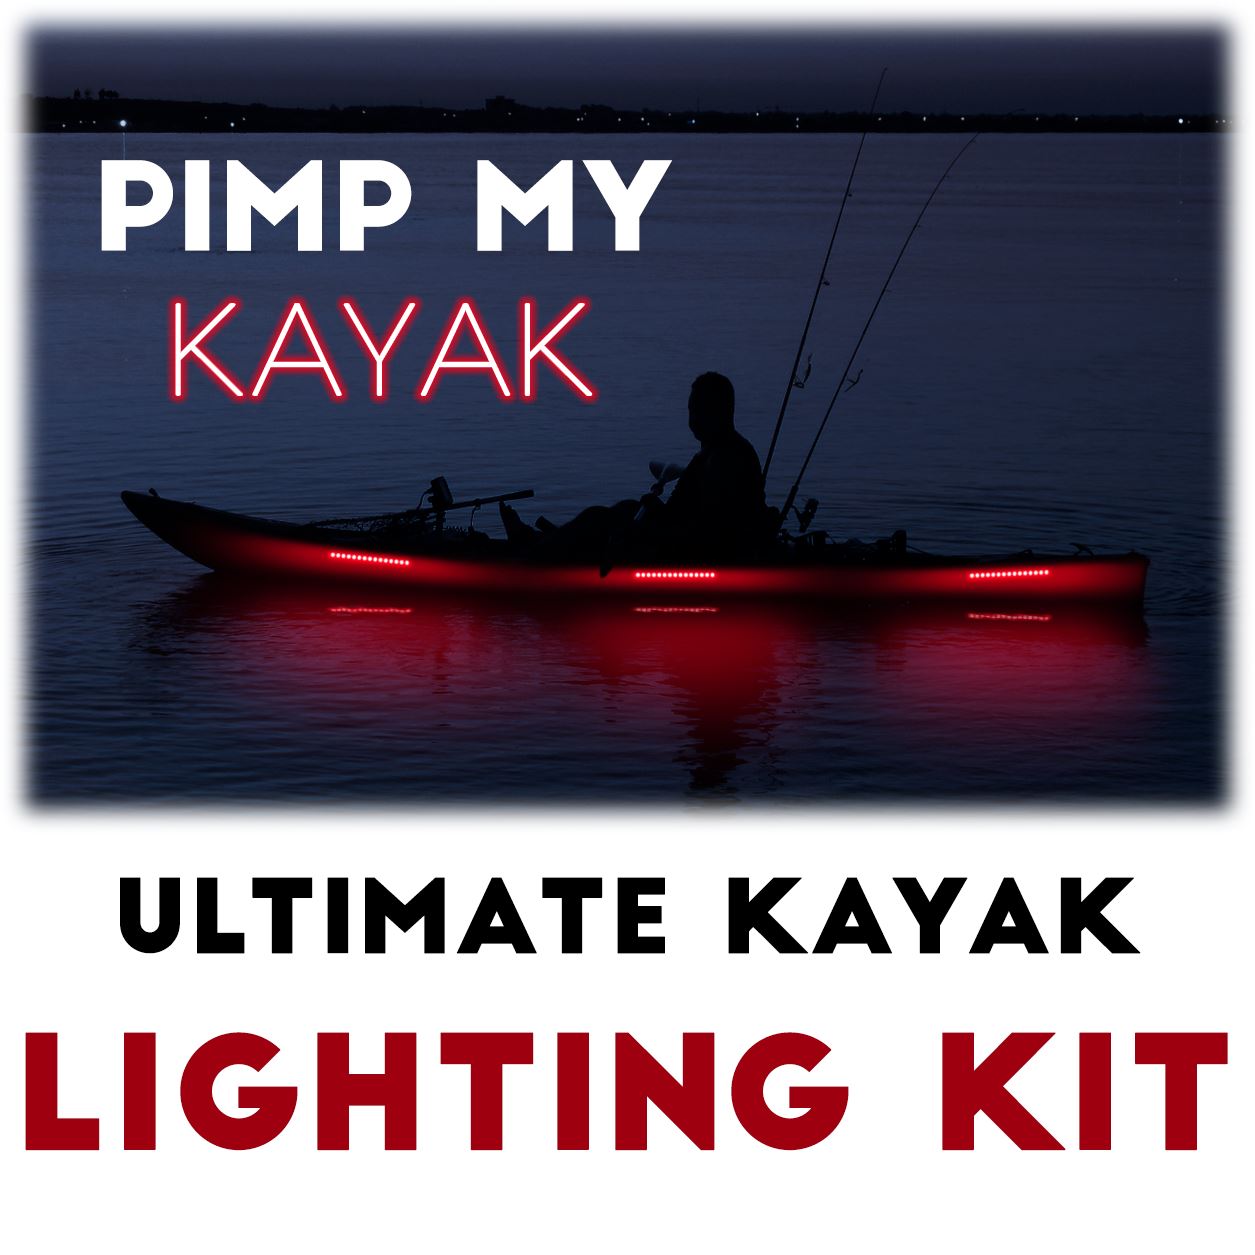 Pimp my Kayak - Red LED Lighting DIY Kit - 30,000 Lumens- Includes Red & Green Navigation Lights Pimp my Kayak Green Blob Outdoors 